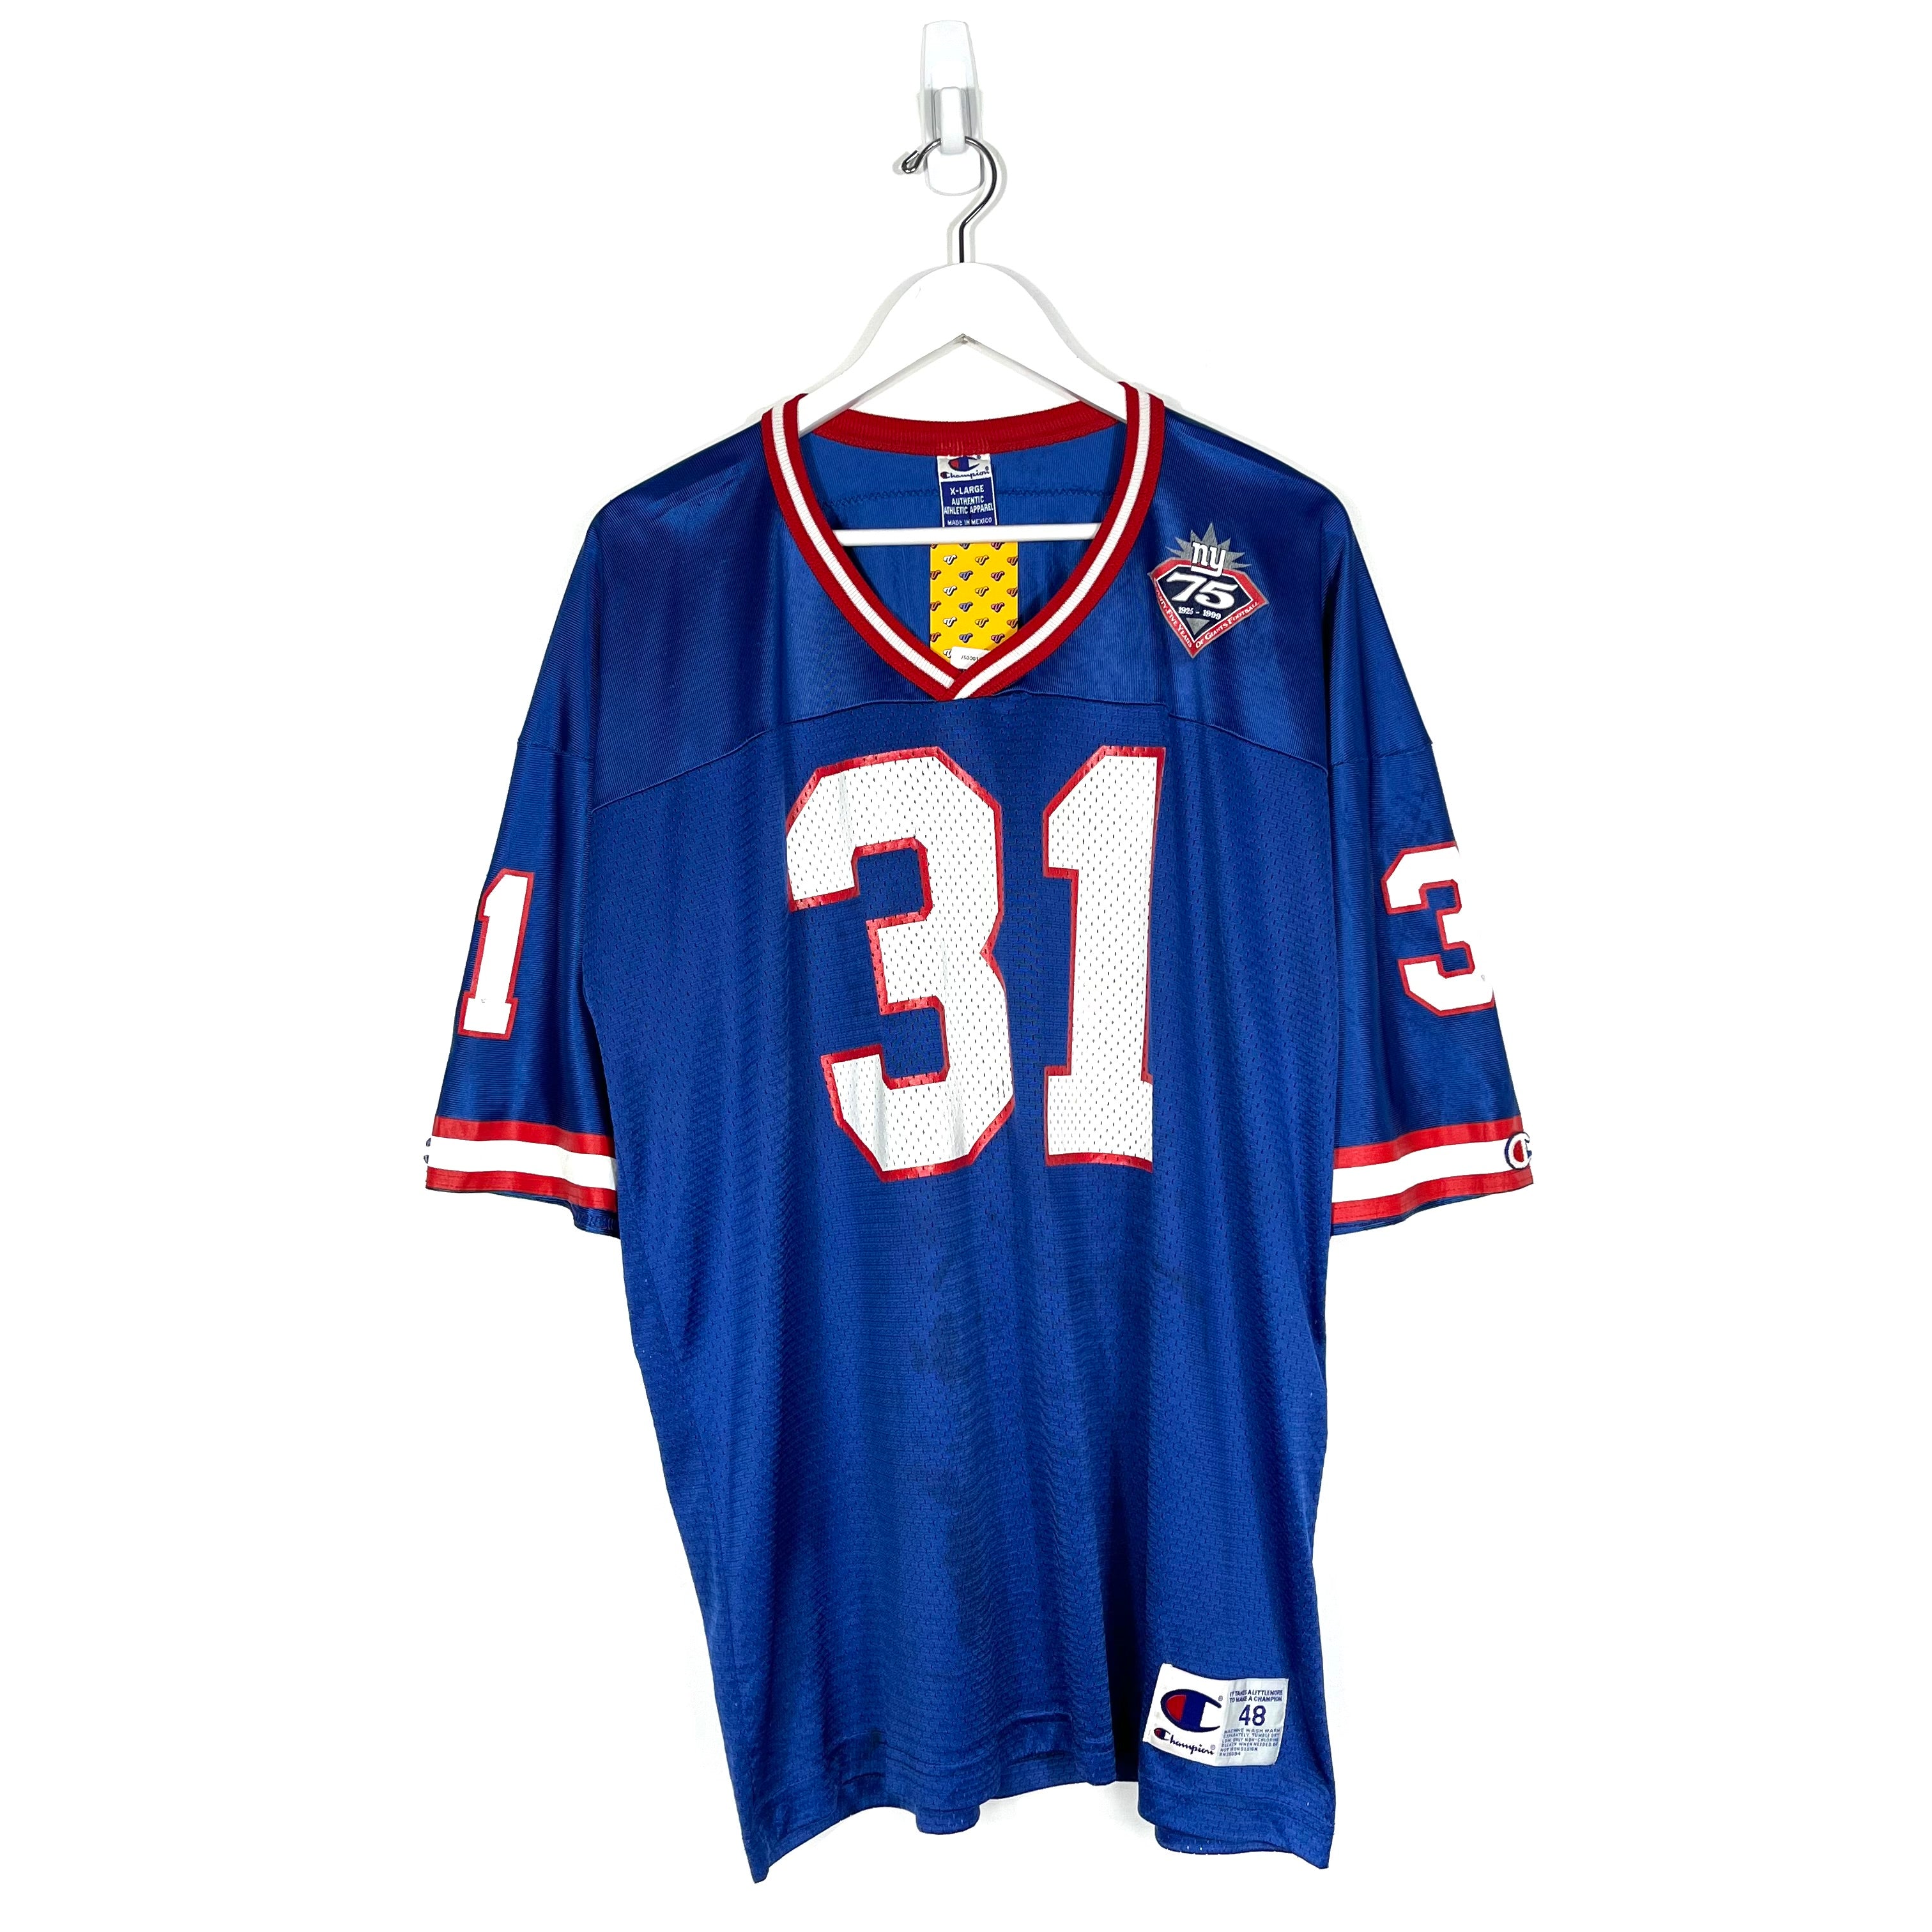 Vintage 1999 Champion NFL New York Giants Jason Sehorn #31 Jersey - Me